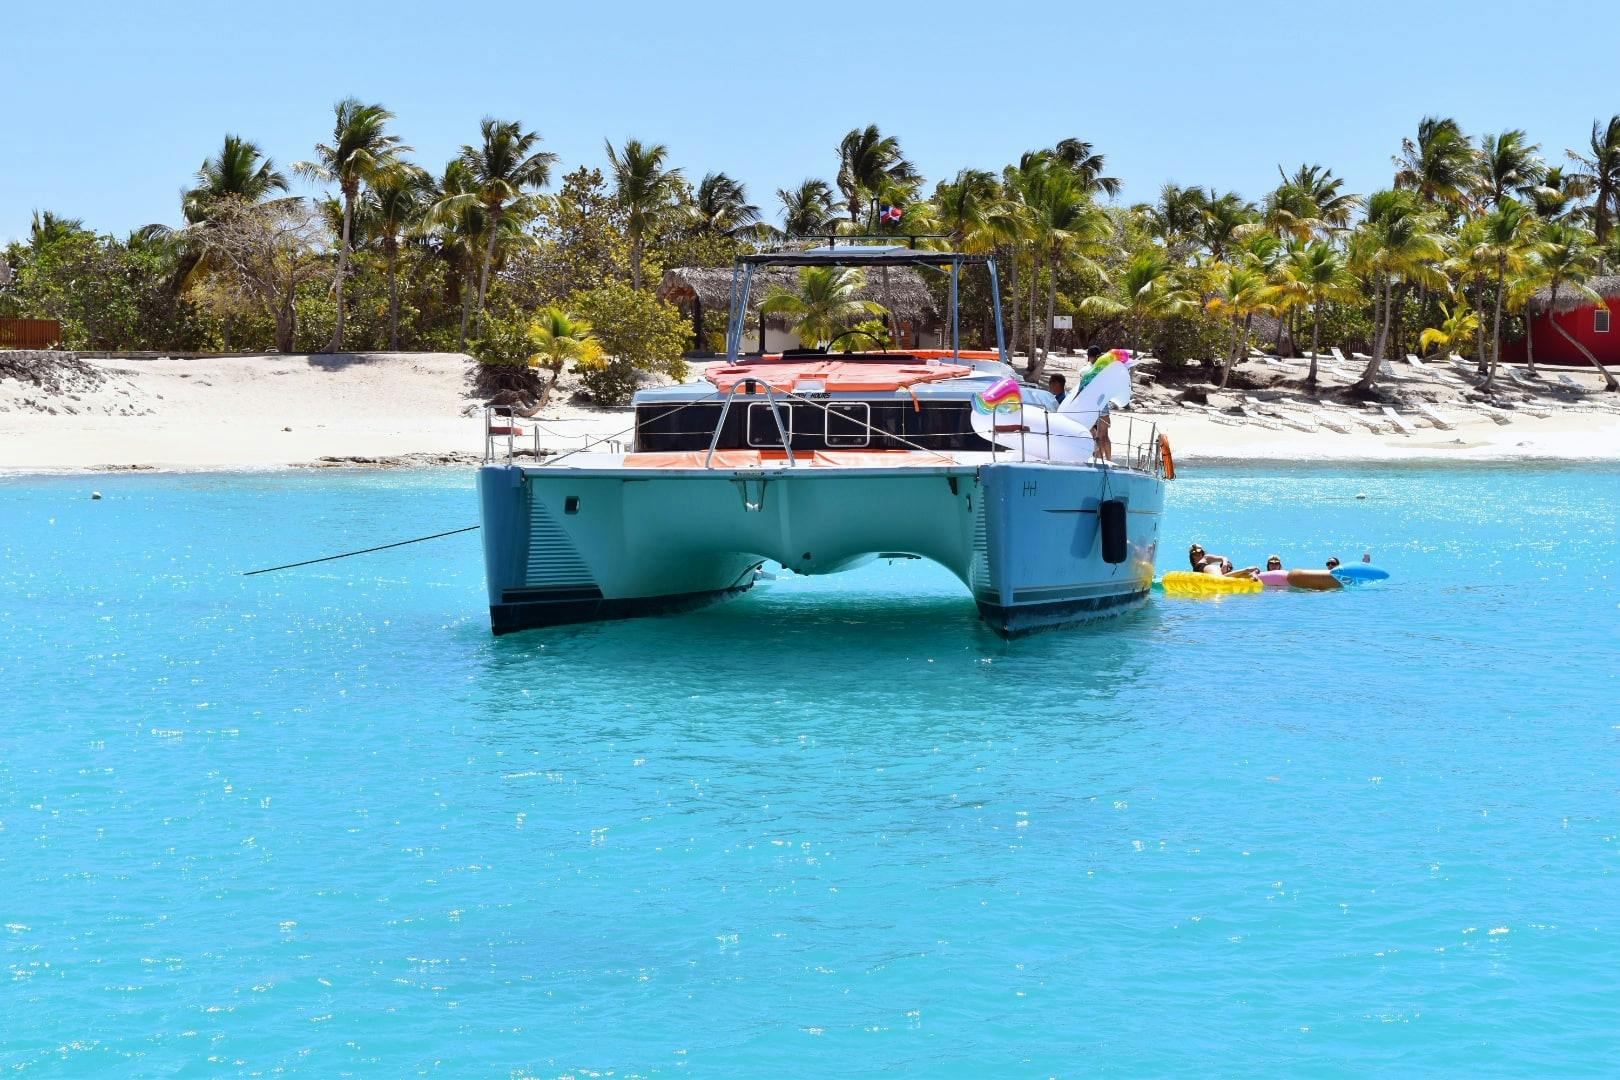 Private Saona Island Luxury Catamaran Cruise